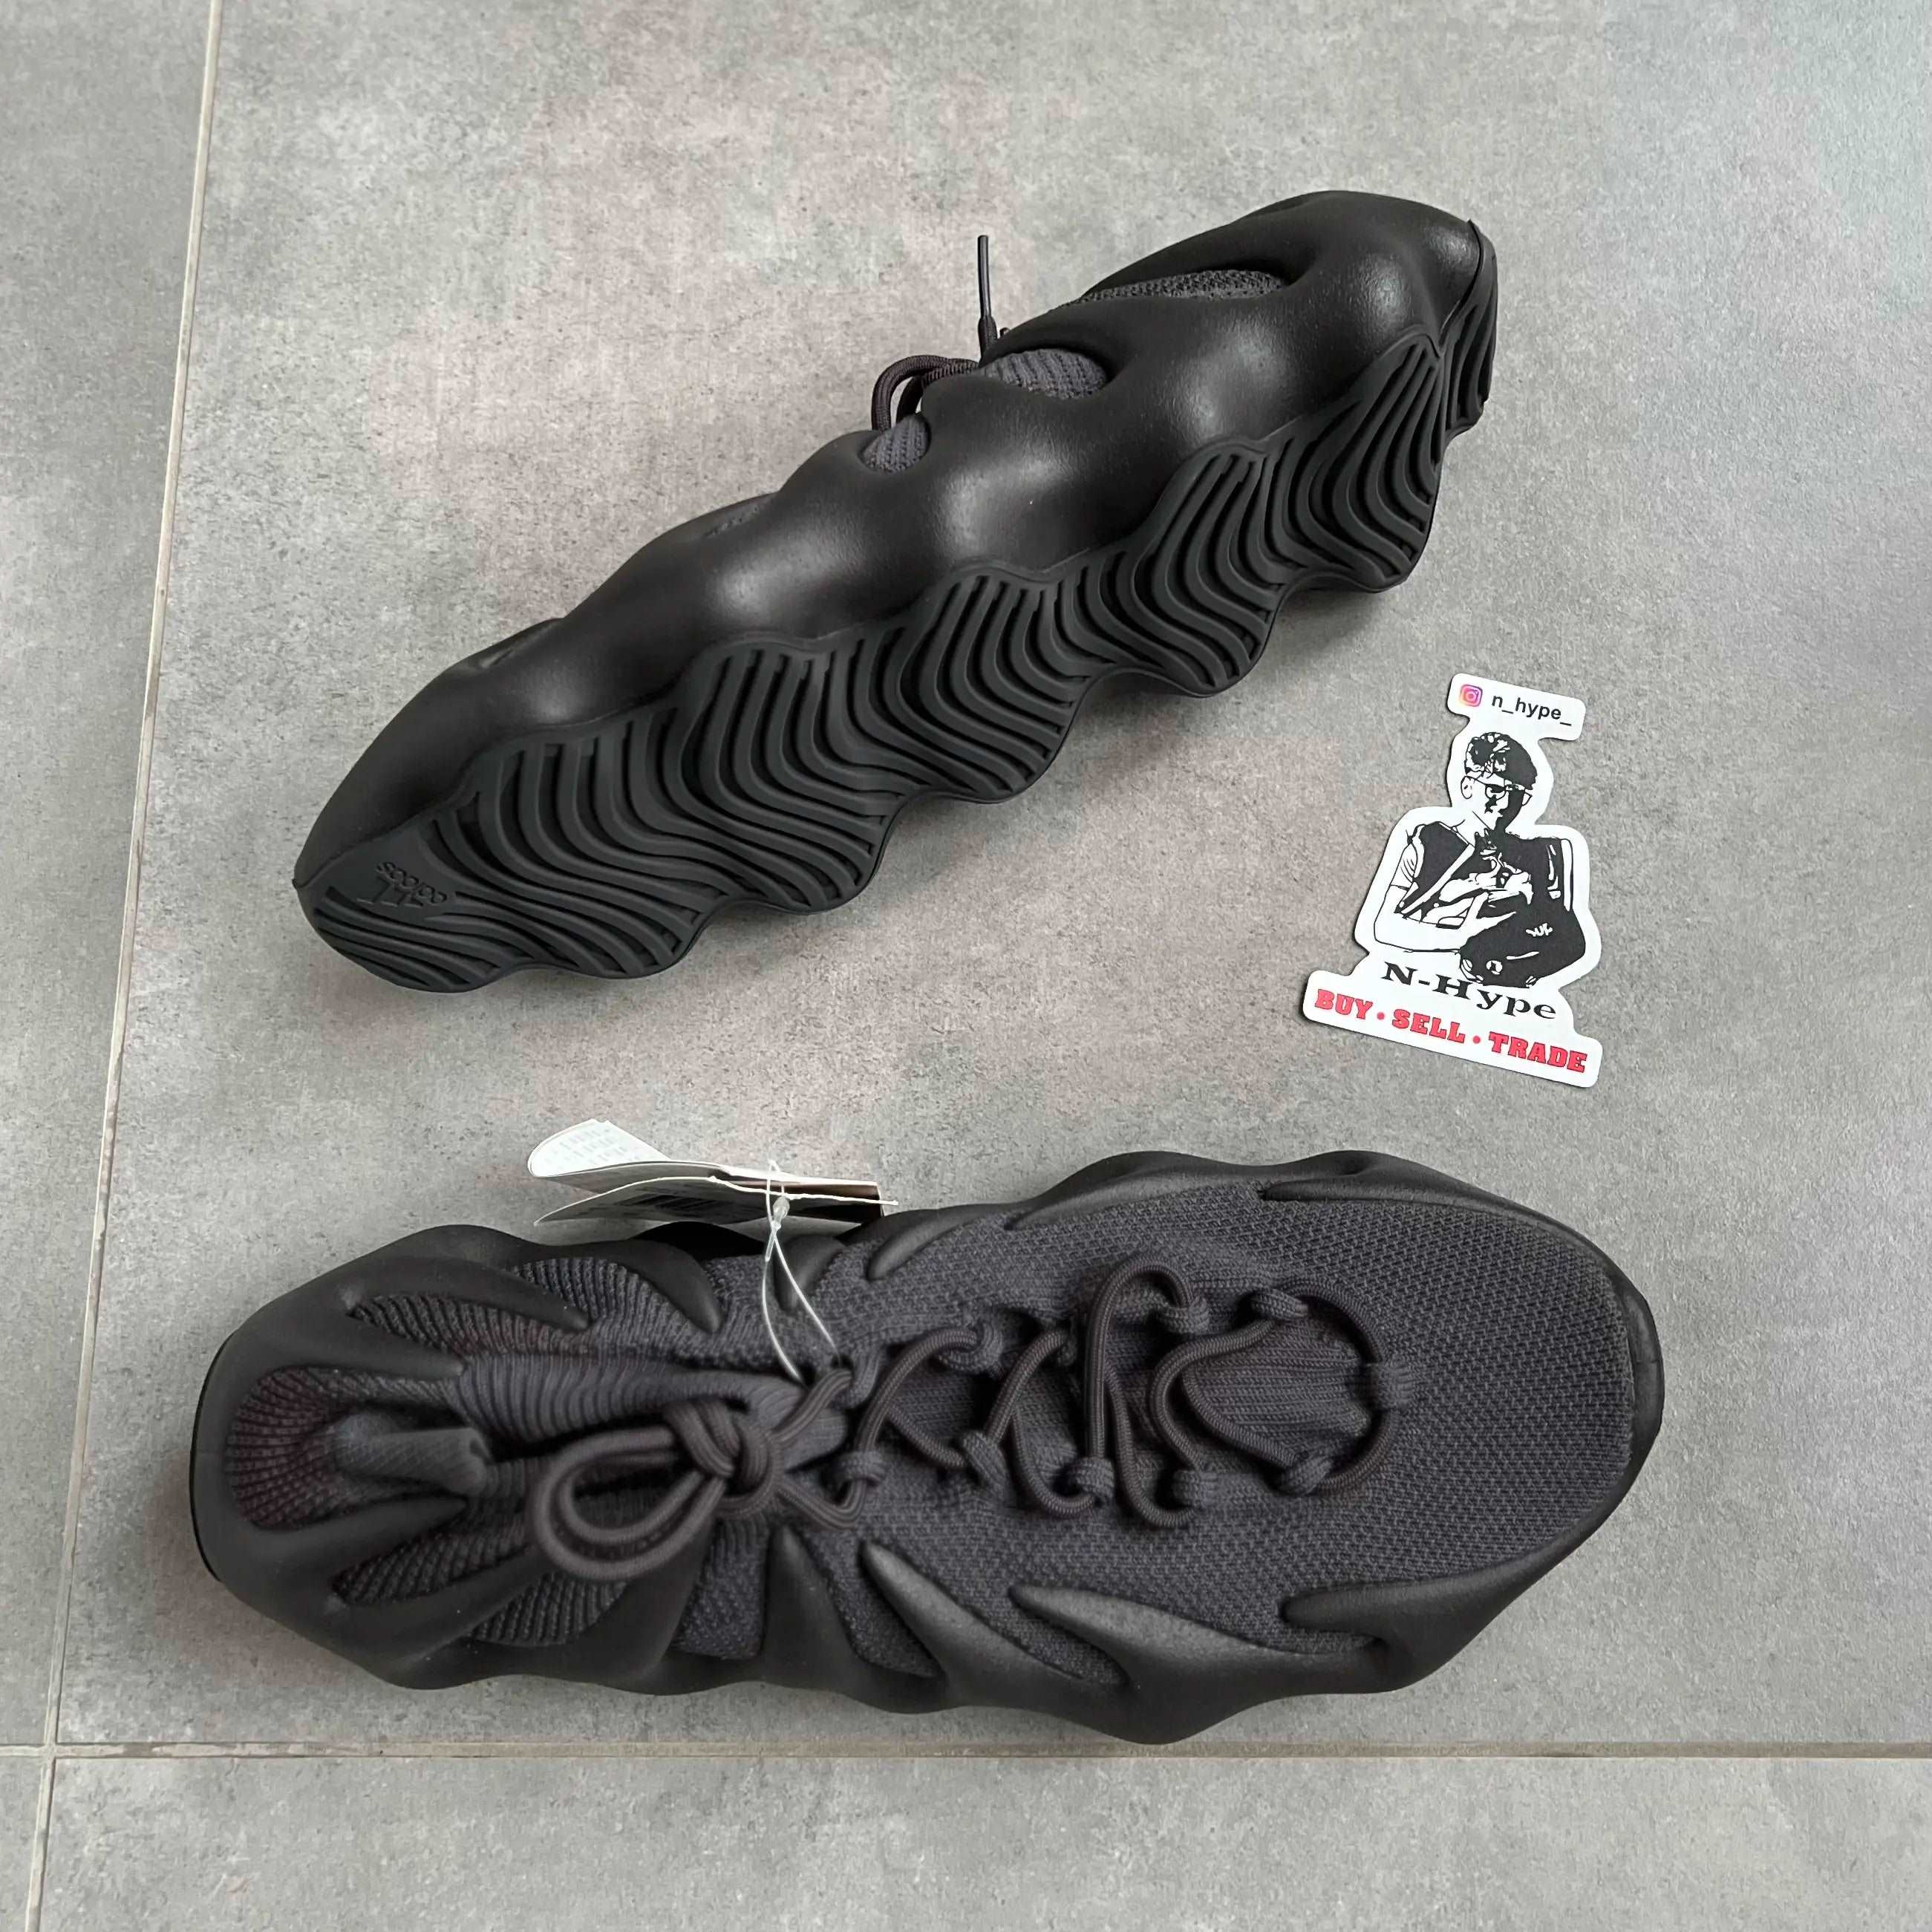 Adidas Yeezy 450 Utility Black